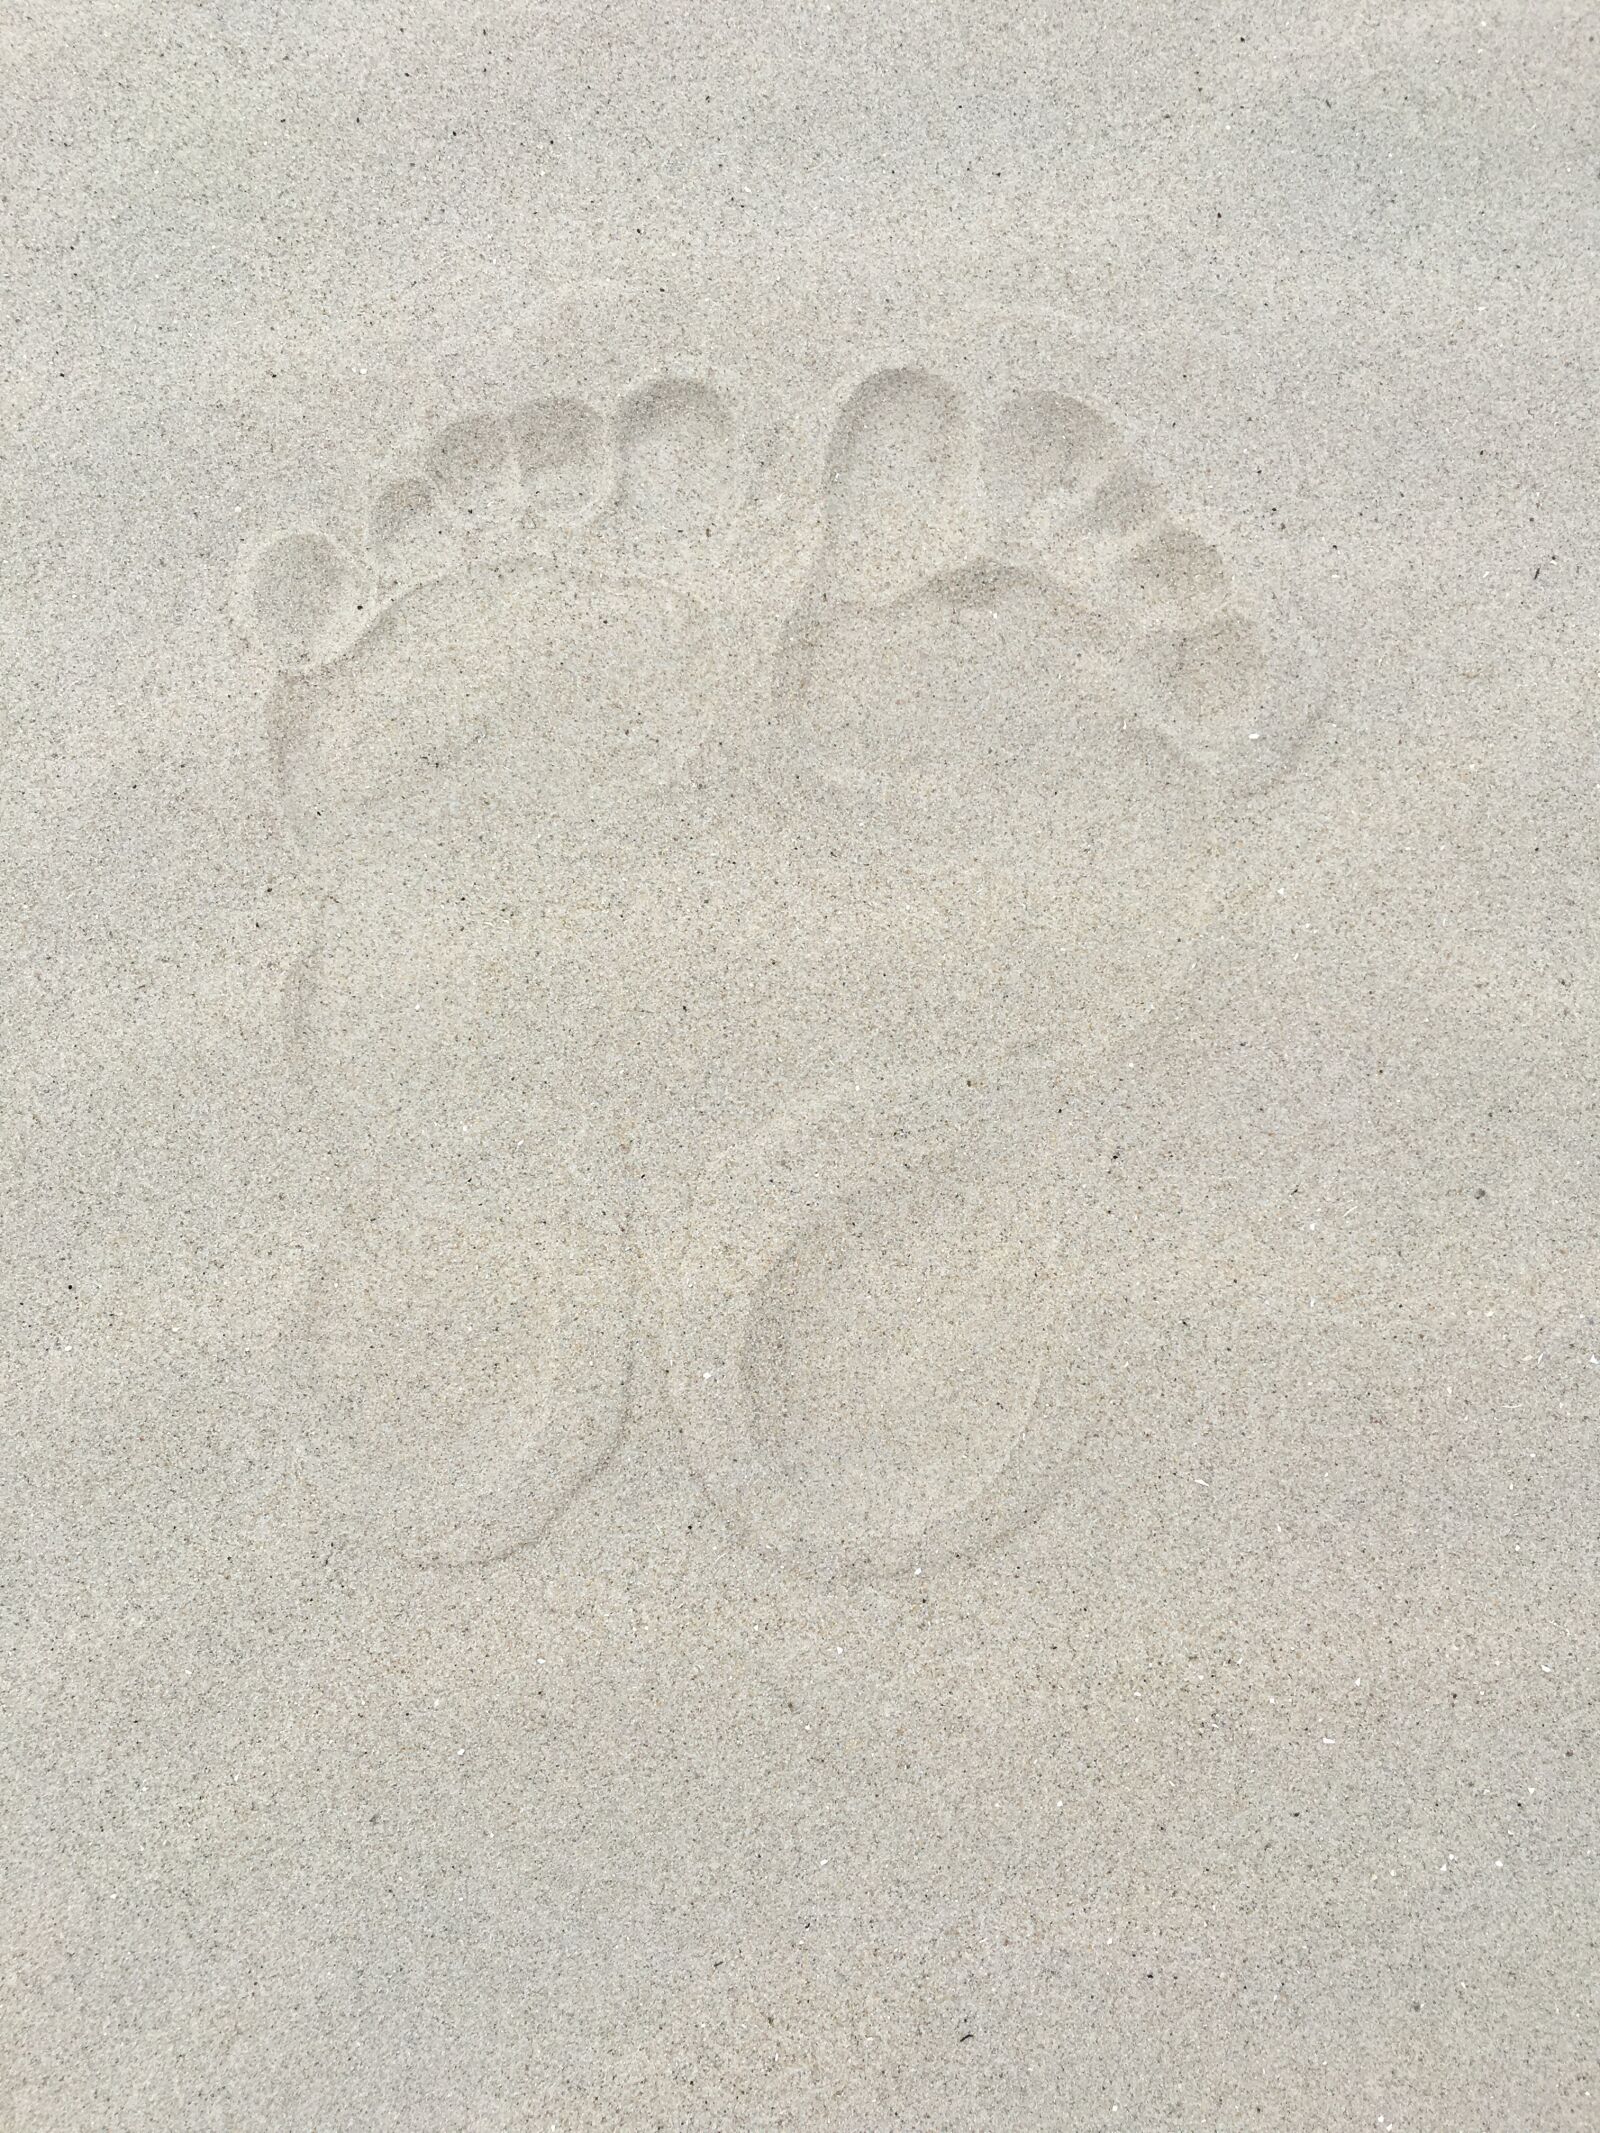 Apple iPhone 6s sample photo. Sand, footprints, prints photography